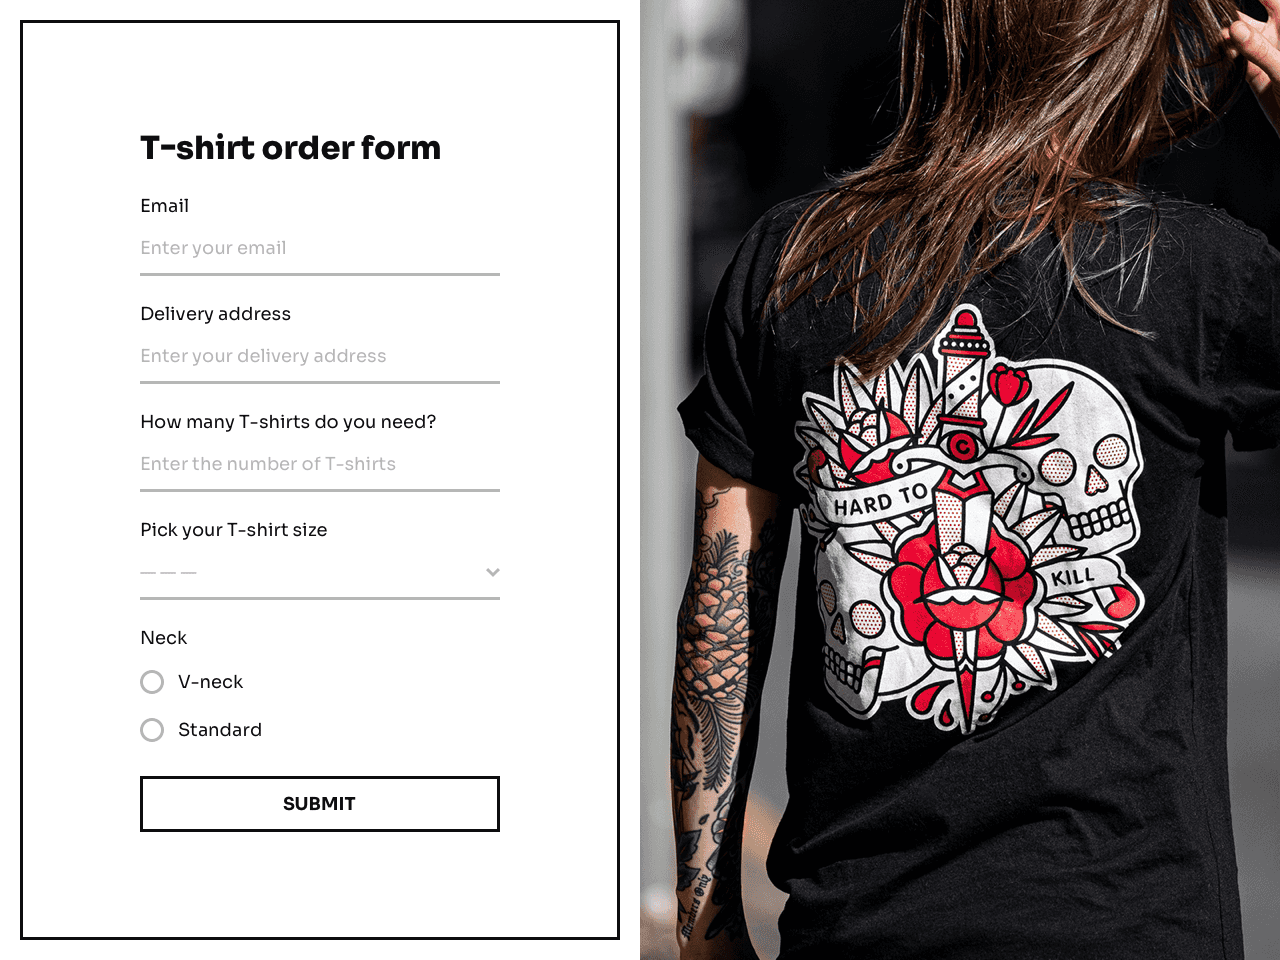 Online T-shirt order form template powered by Getform